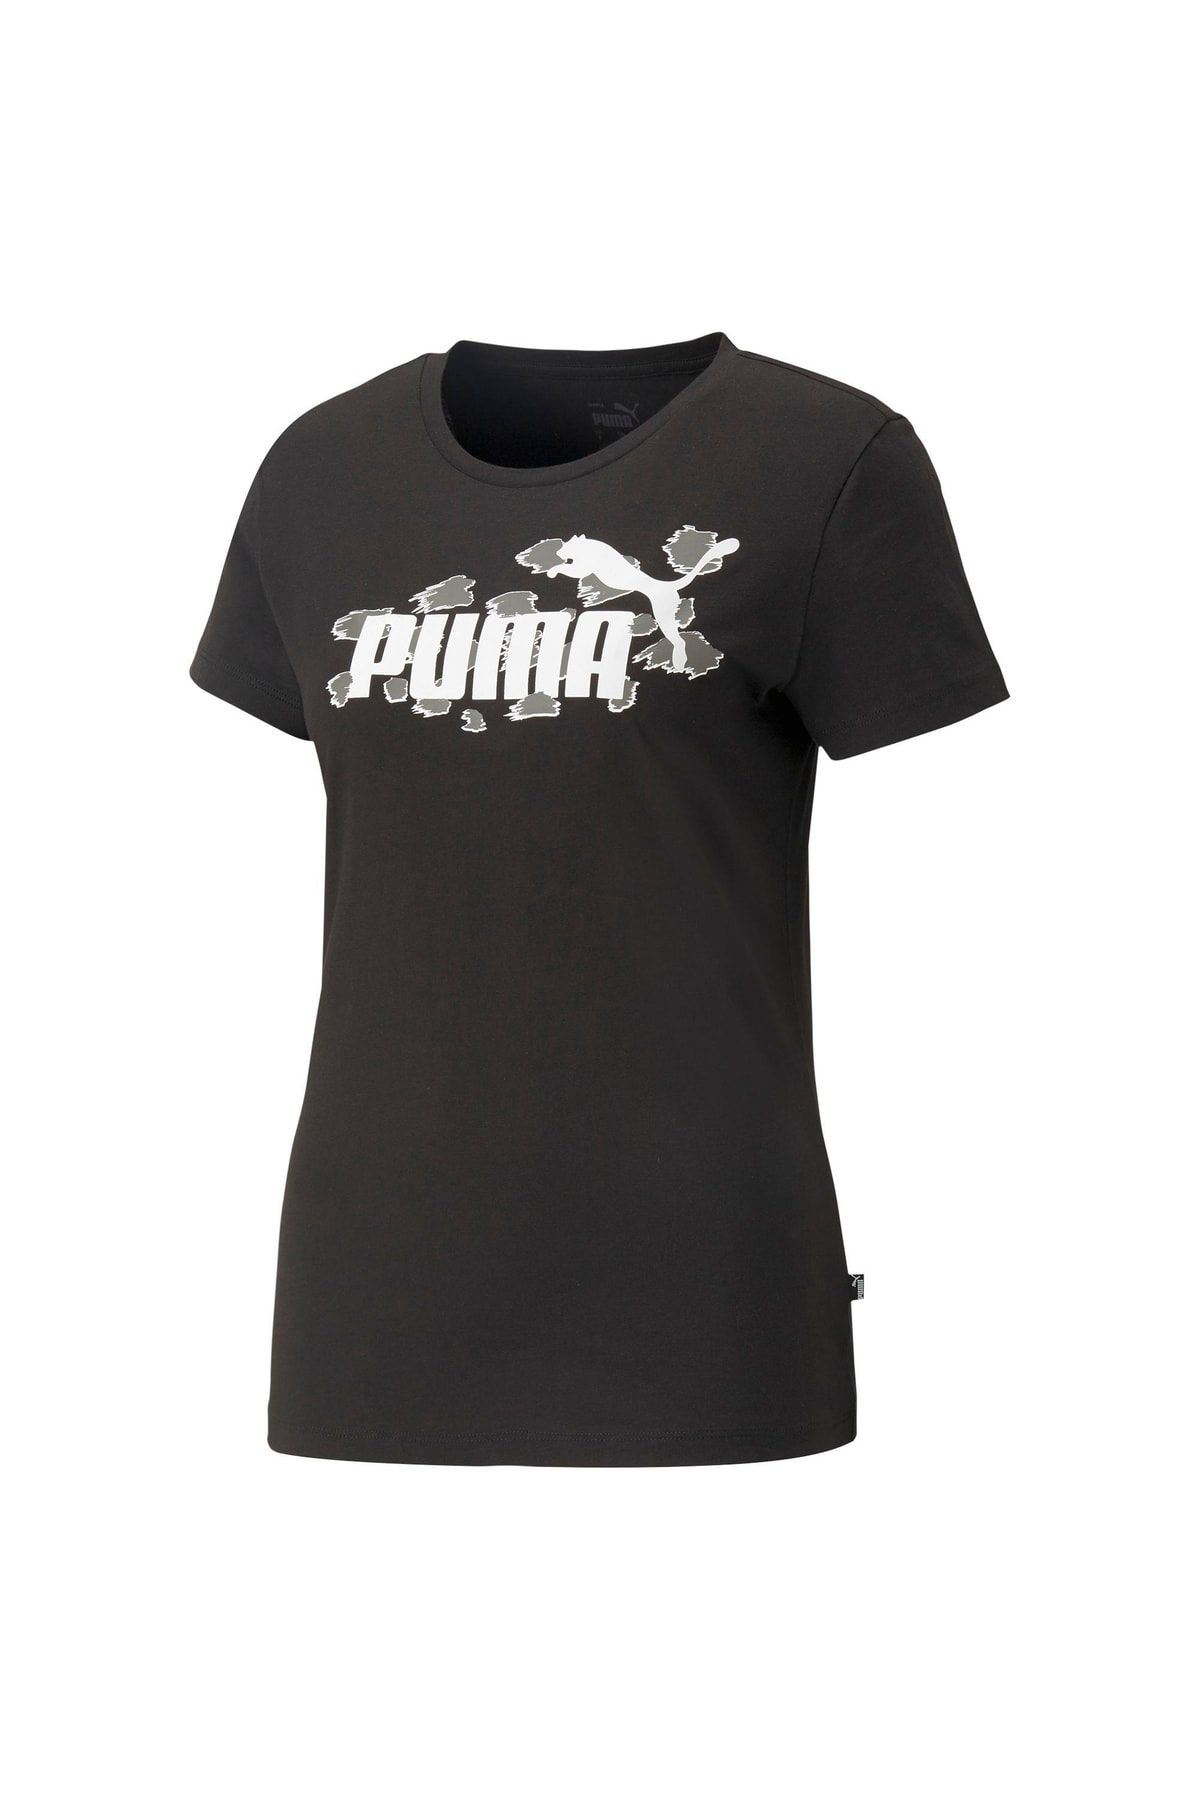 Puma Ess+ Animal Tee - Women's Black T-Shirt - Trendyol